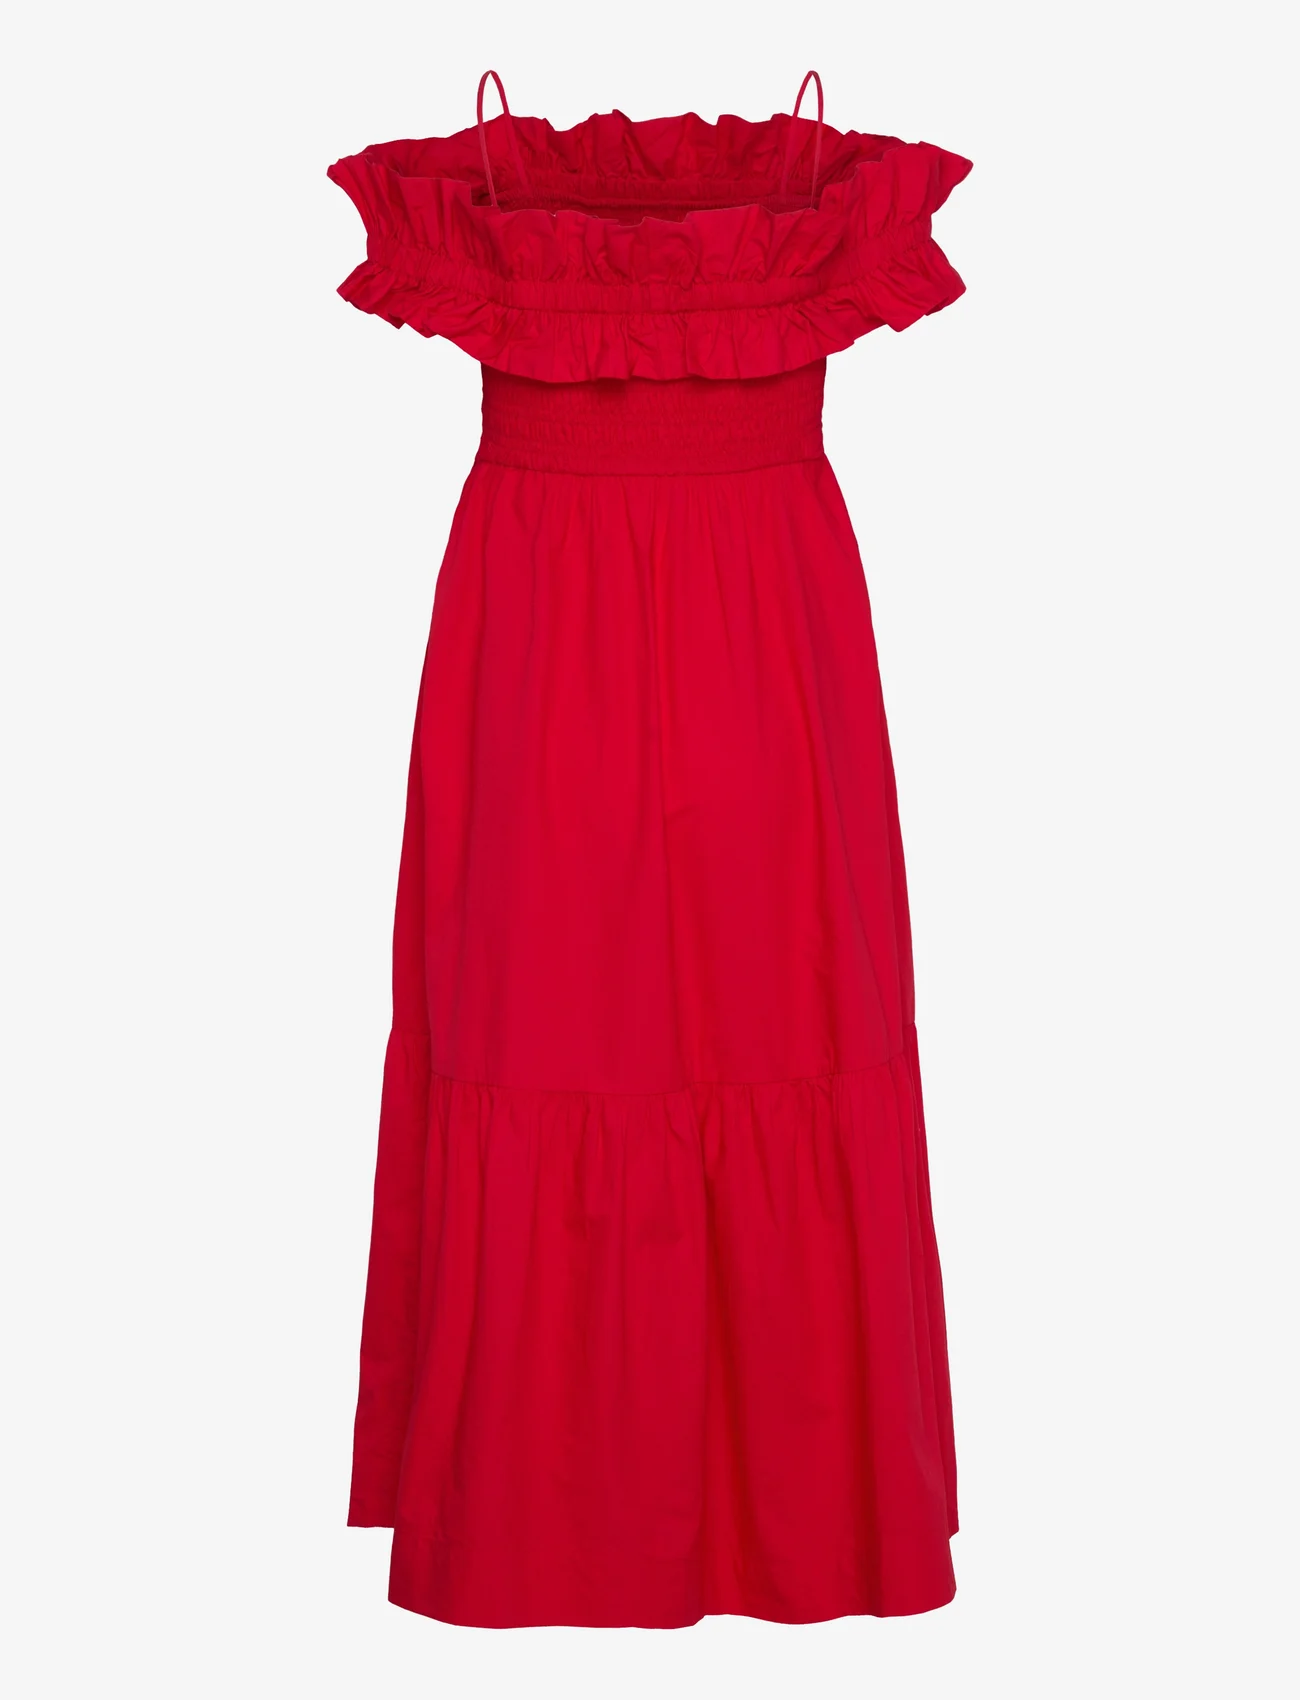 Ganni - Cotton Poplin - maxi dresses - racing red - 1